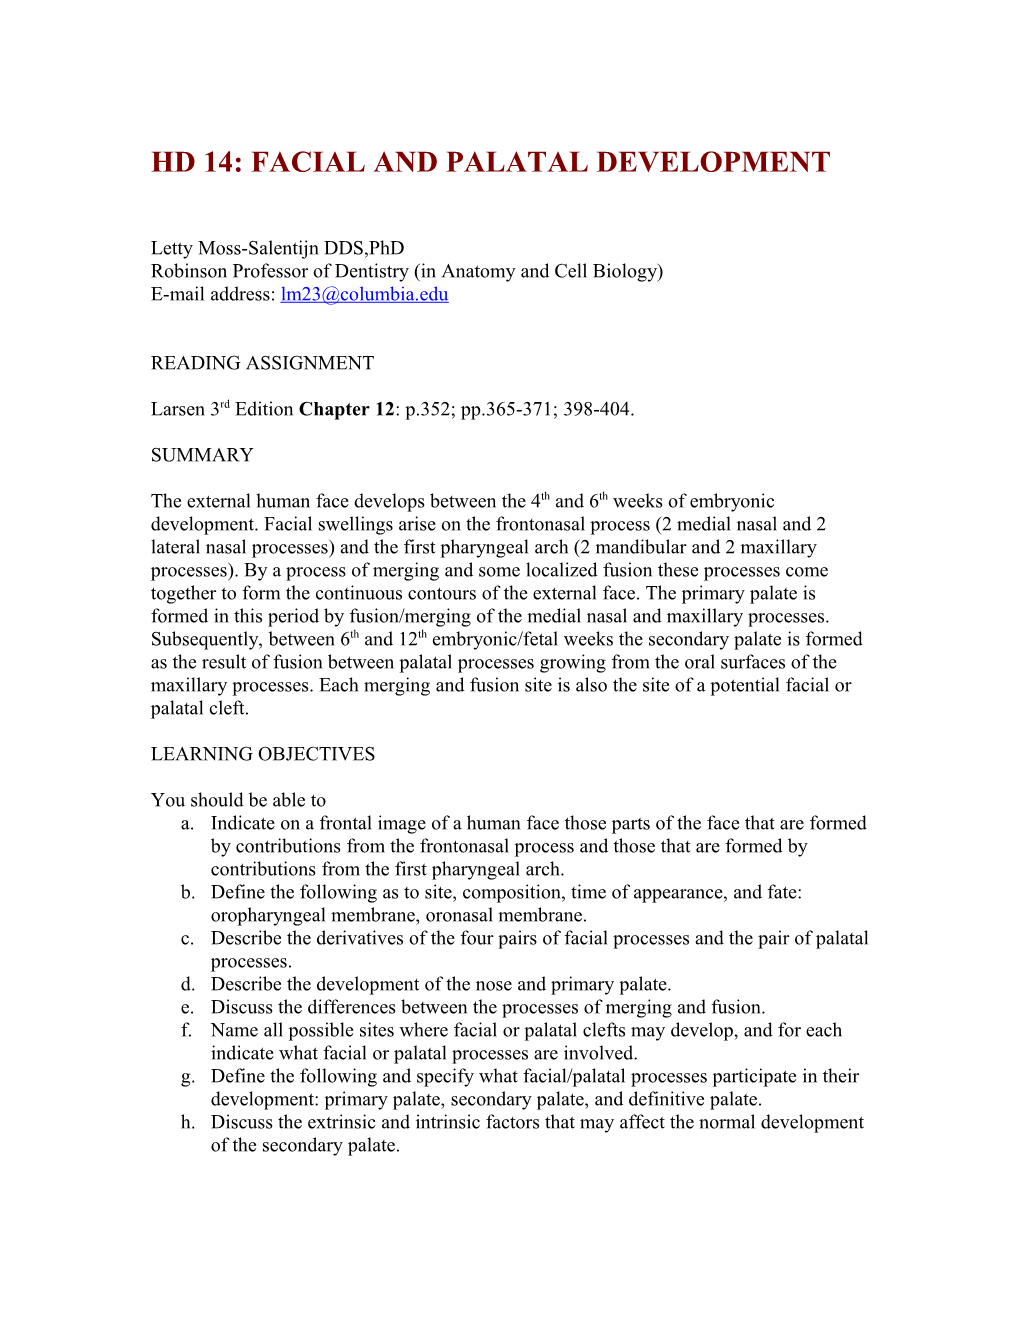 Facial and Palatal Development